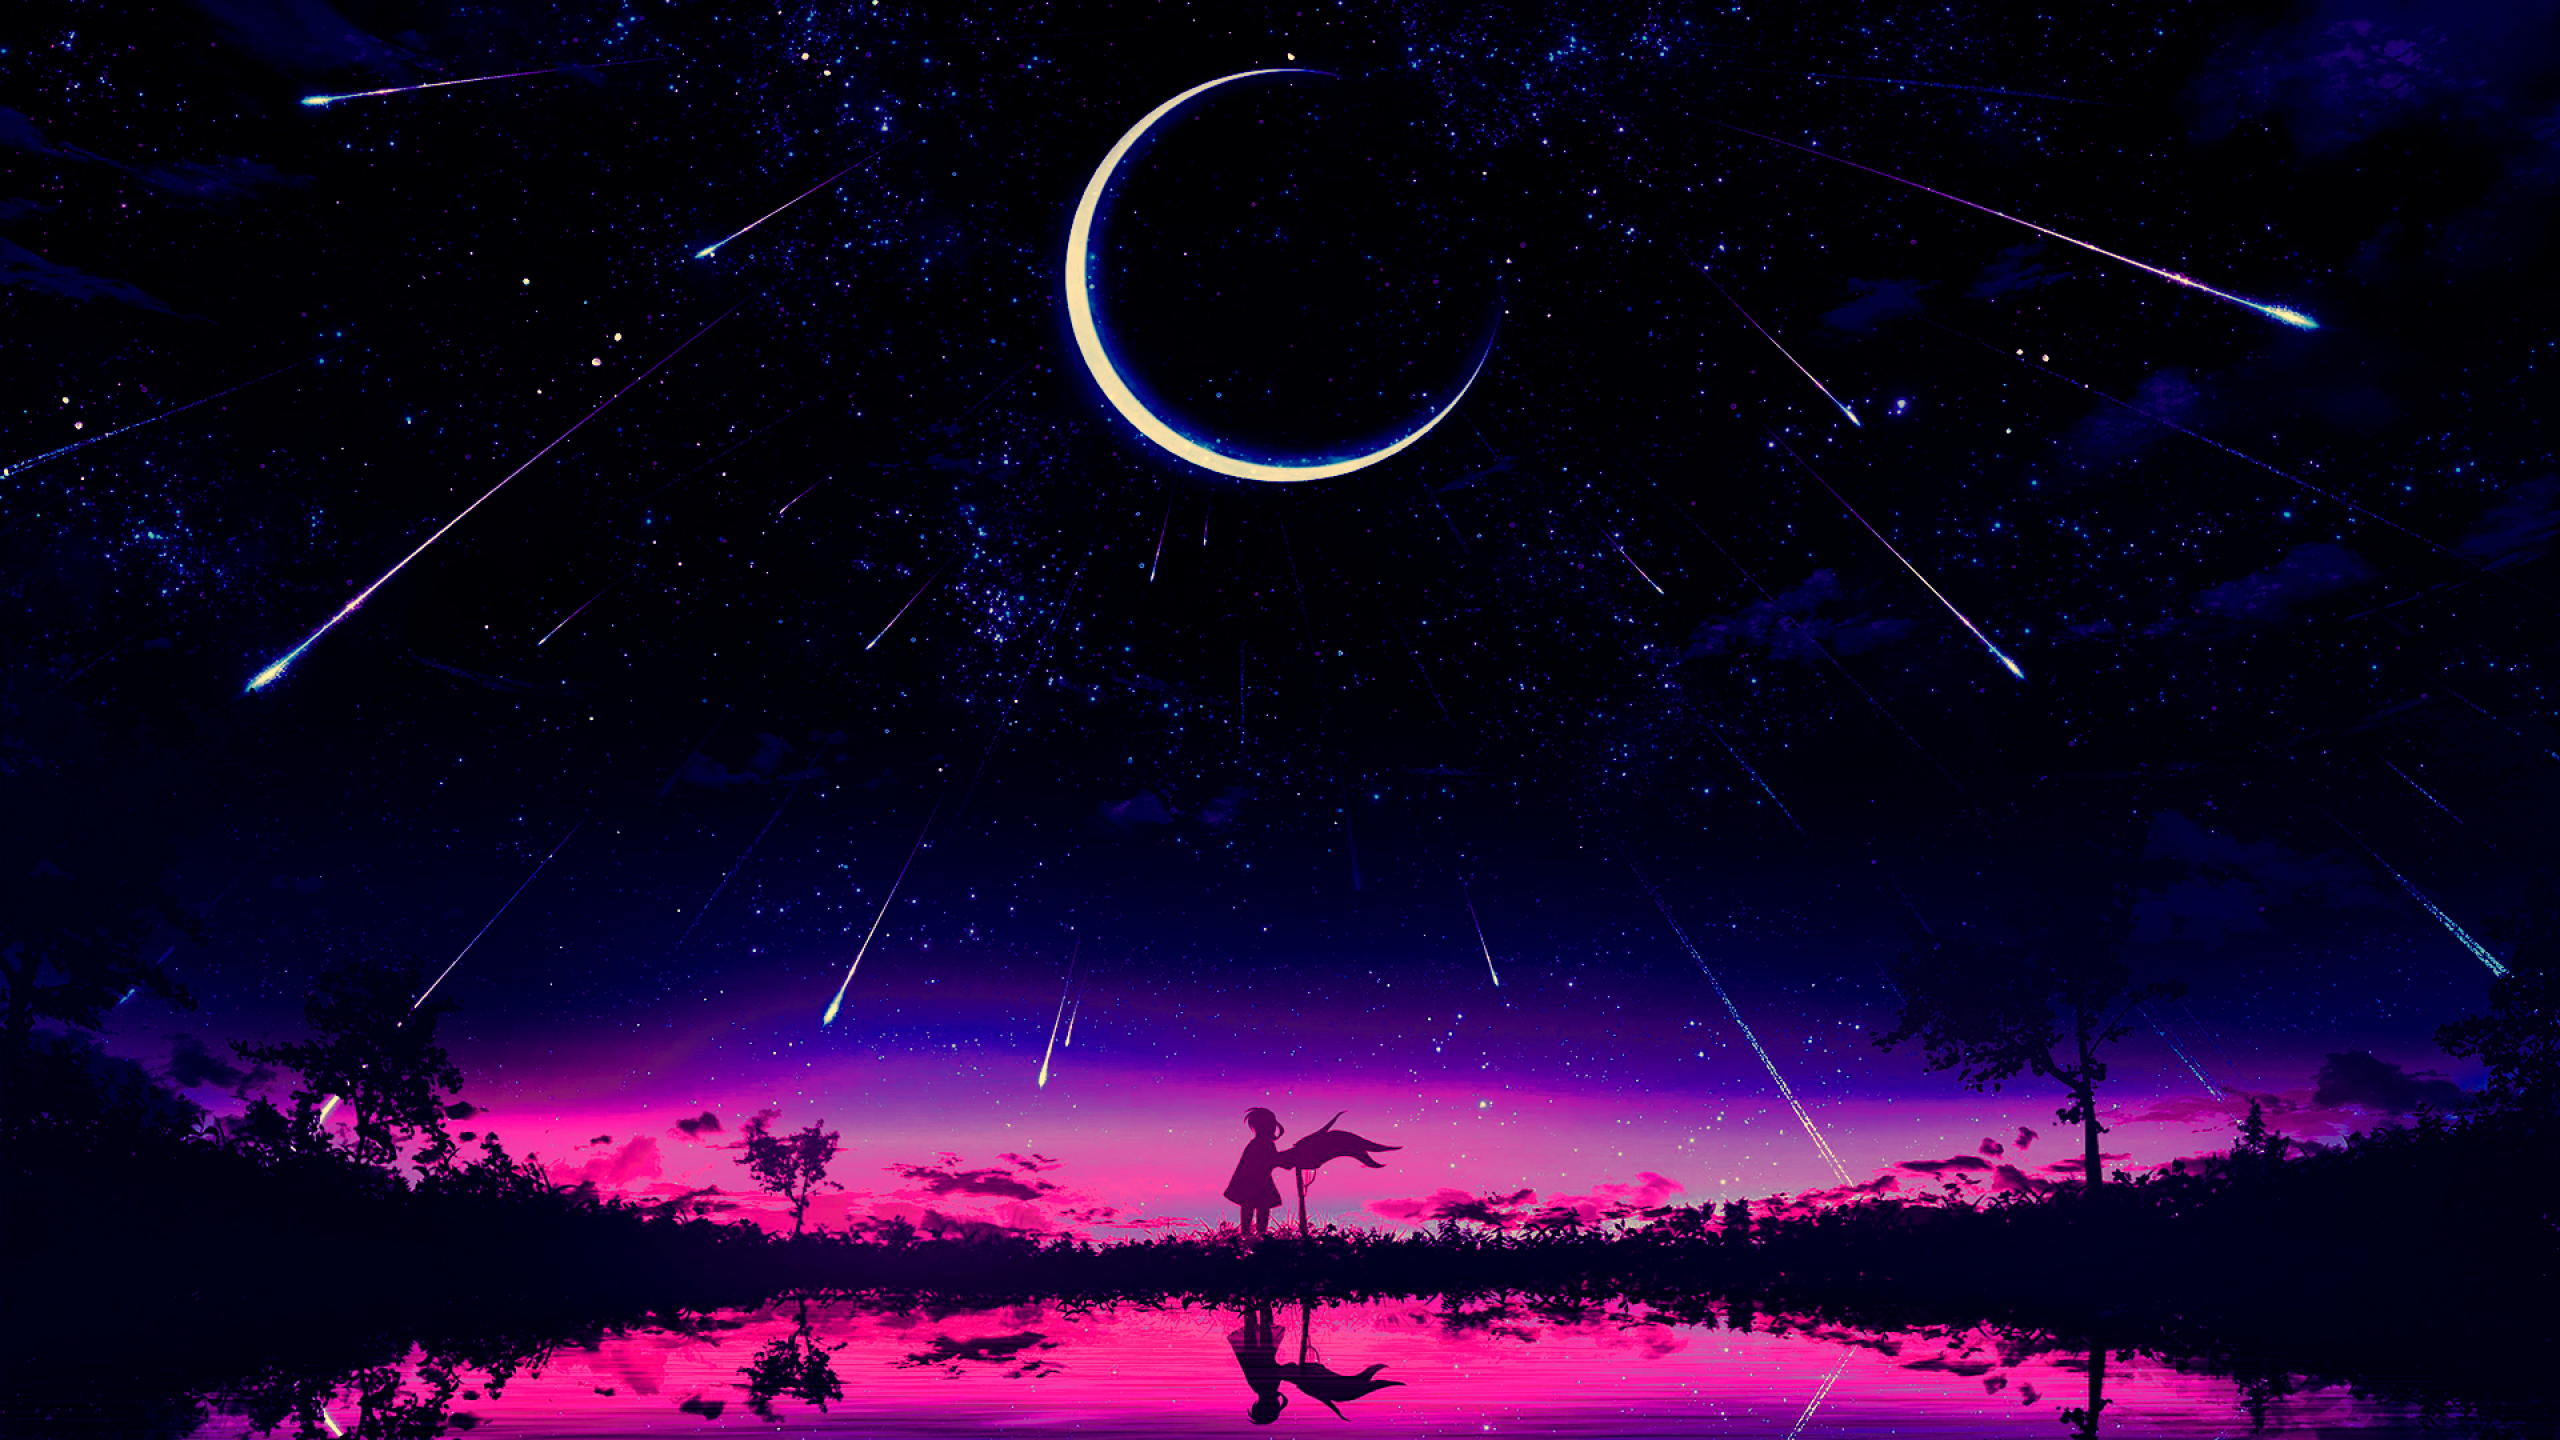 2560x1440 Resolution Cool Anime Starry Night Illustration 1440p